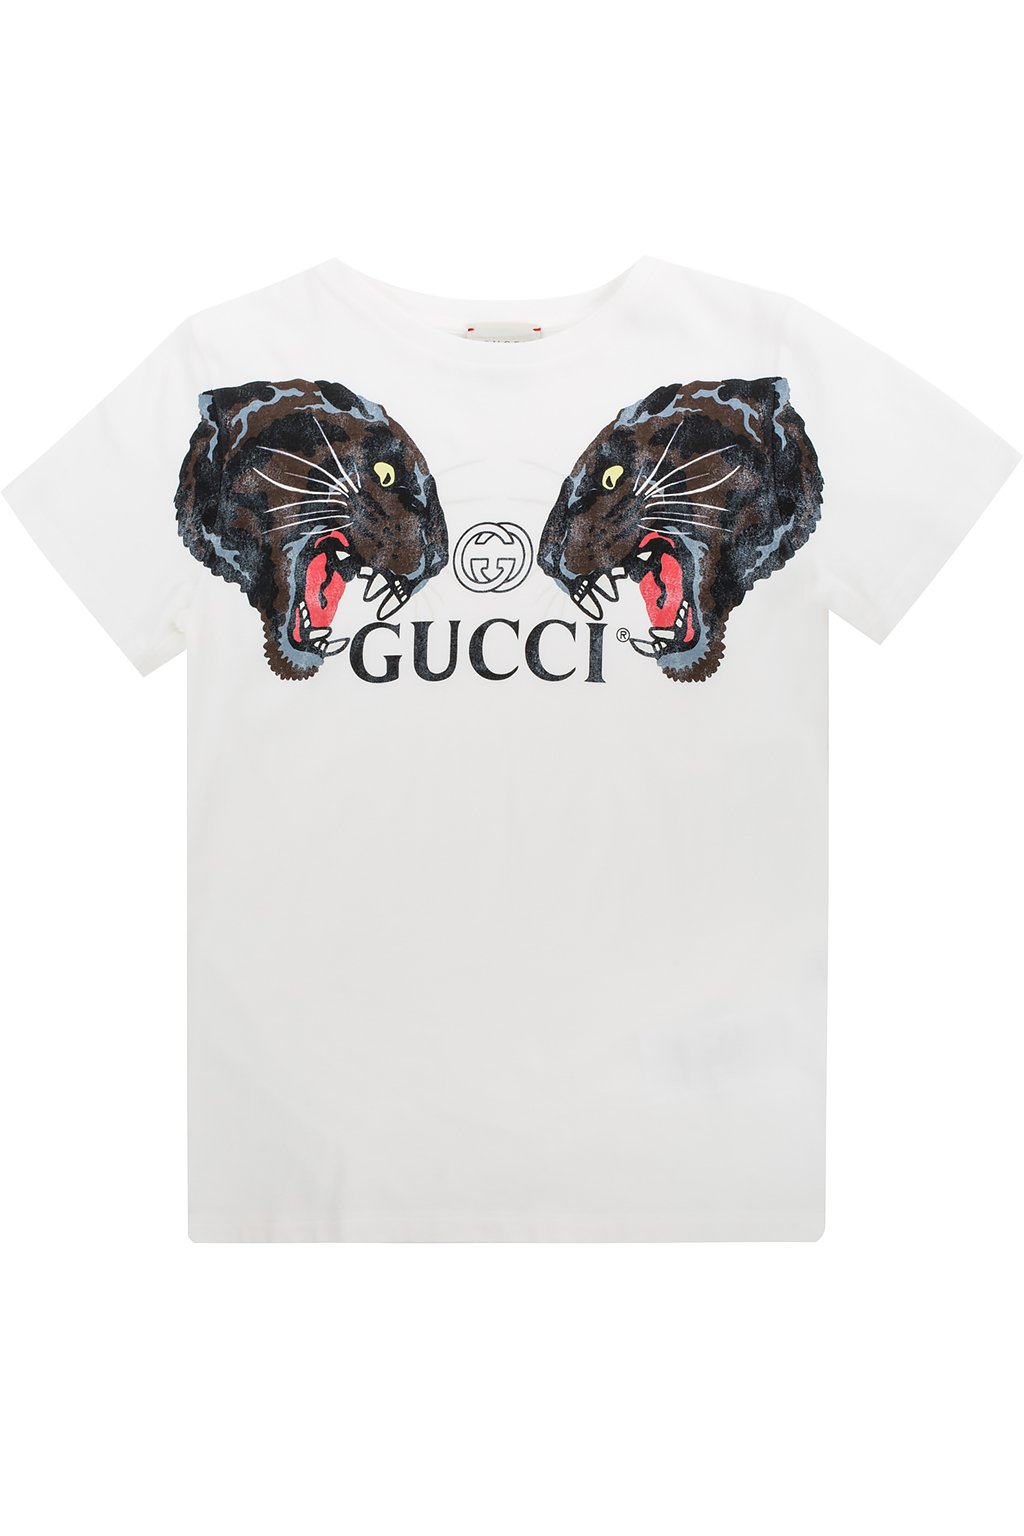 gucci leopard print shirt